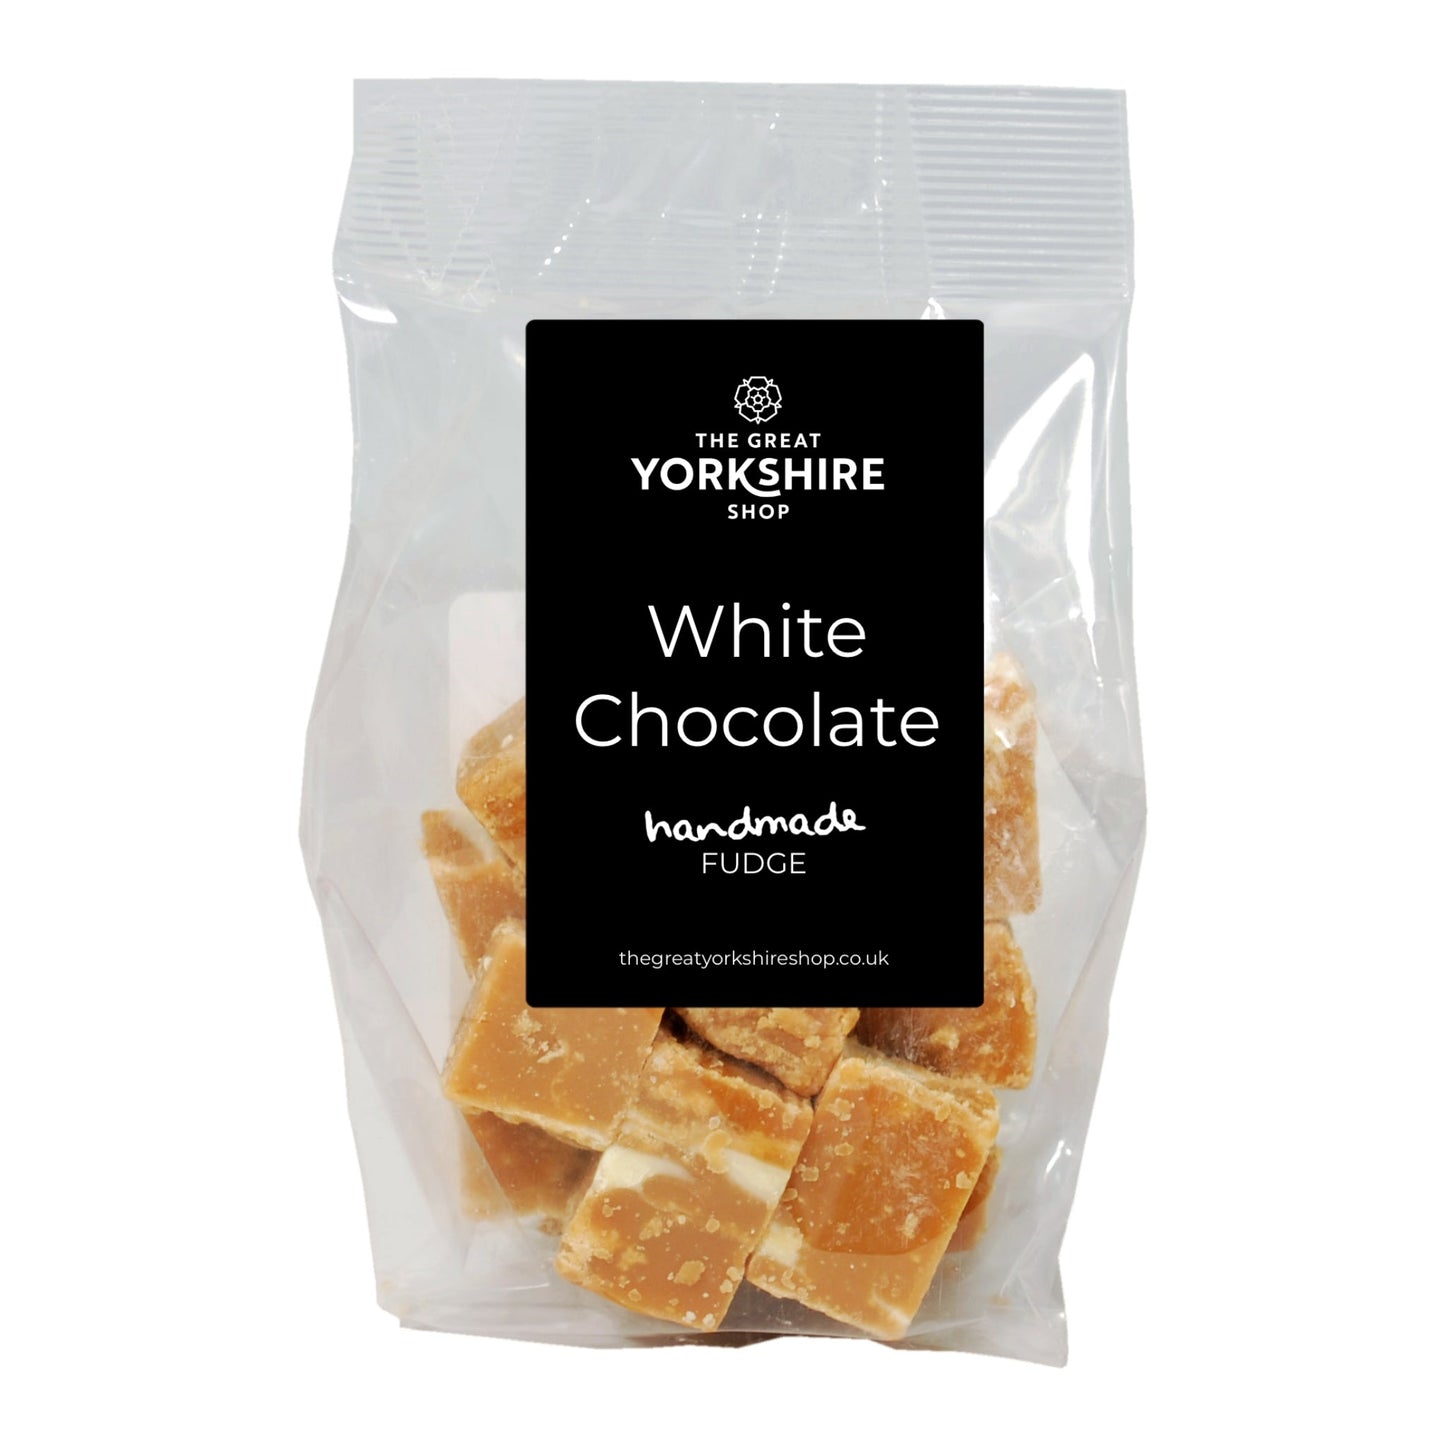 White Chocolate Handmade Fudge - The Great Yorkshire Shop